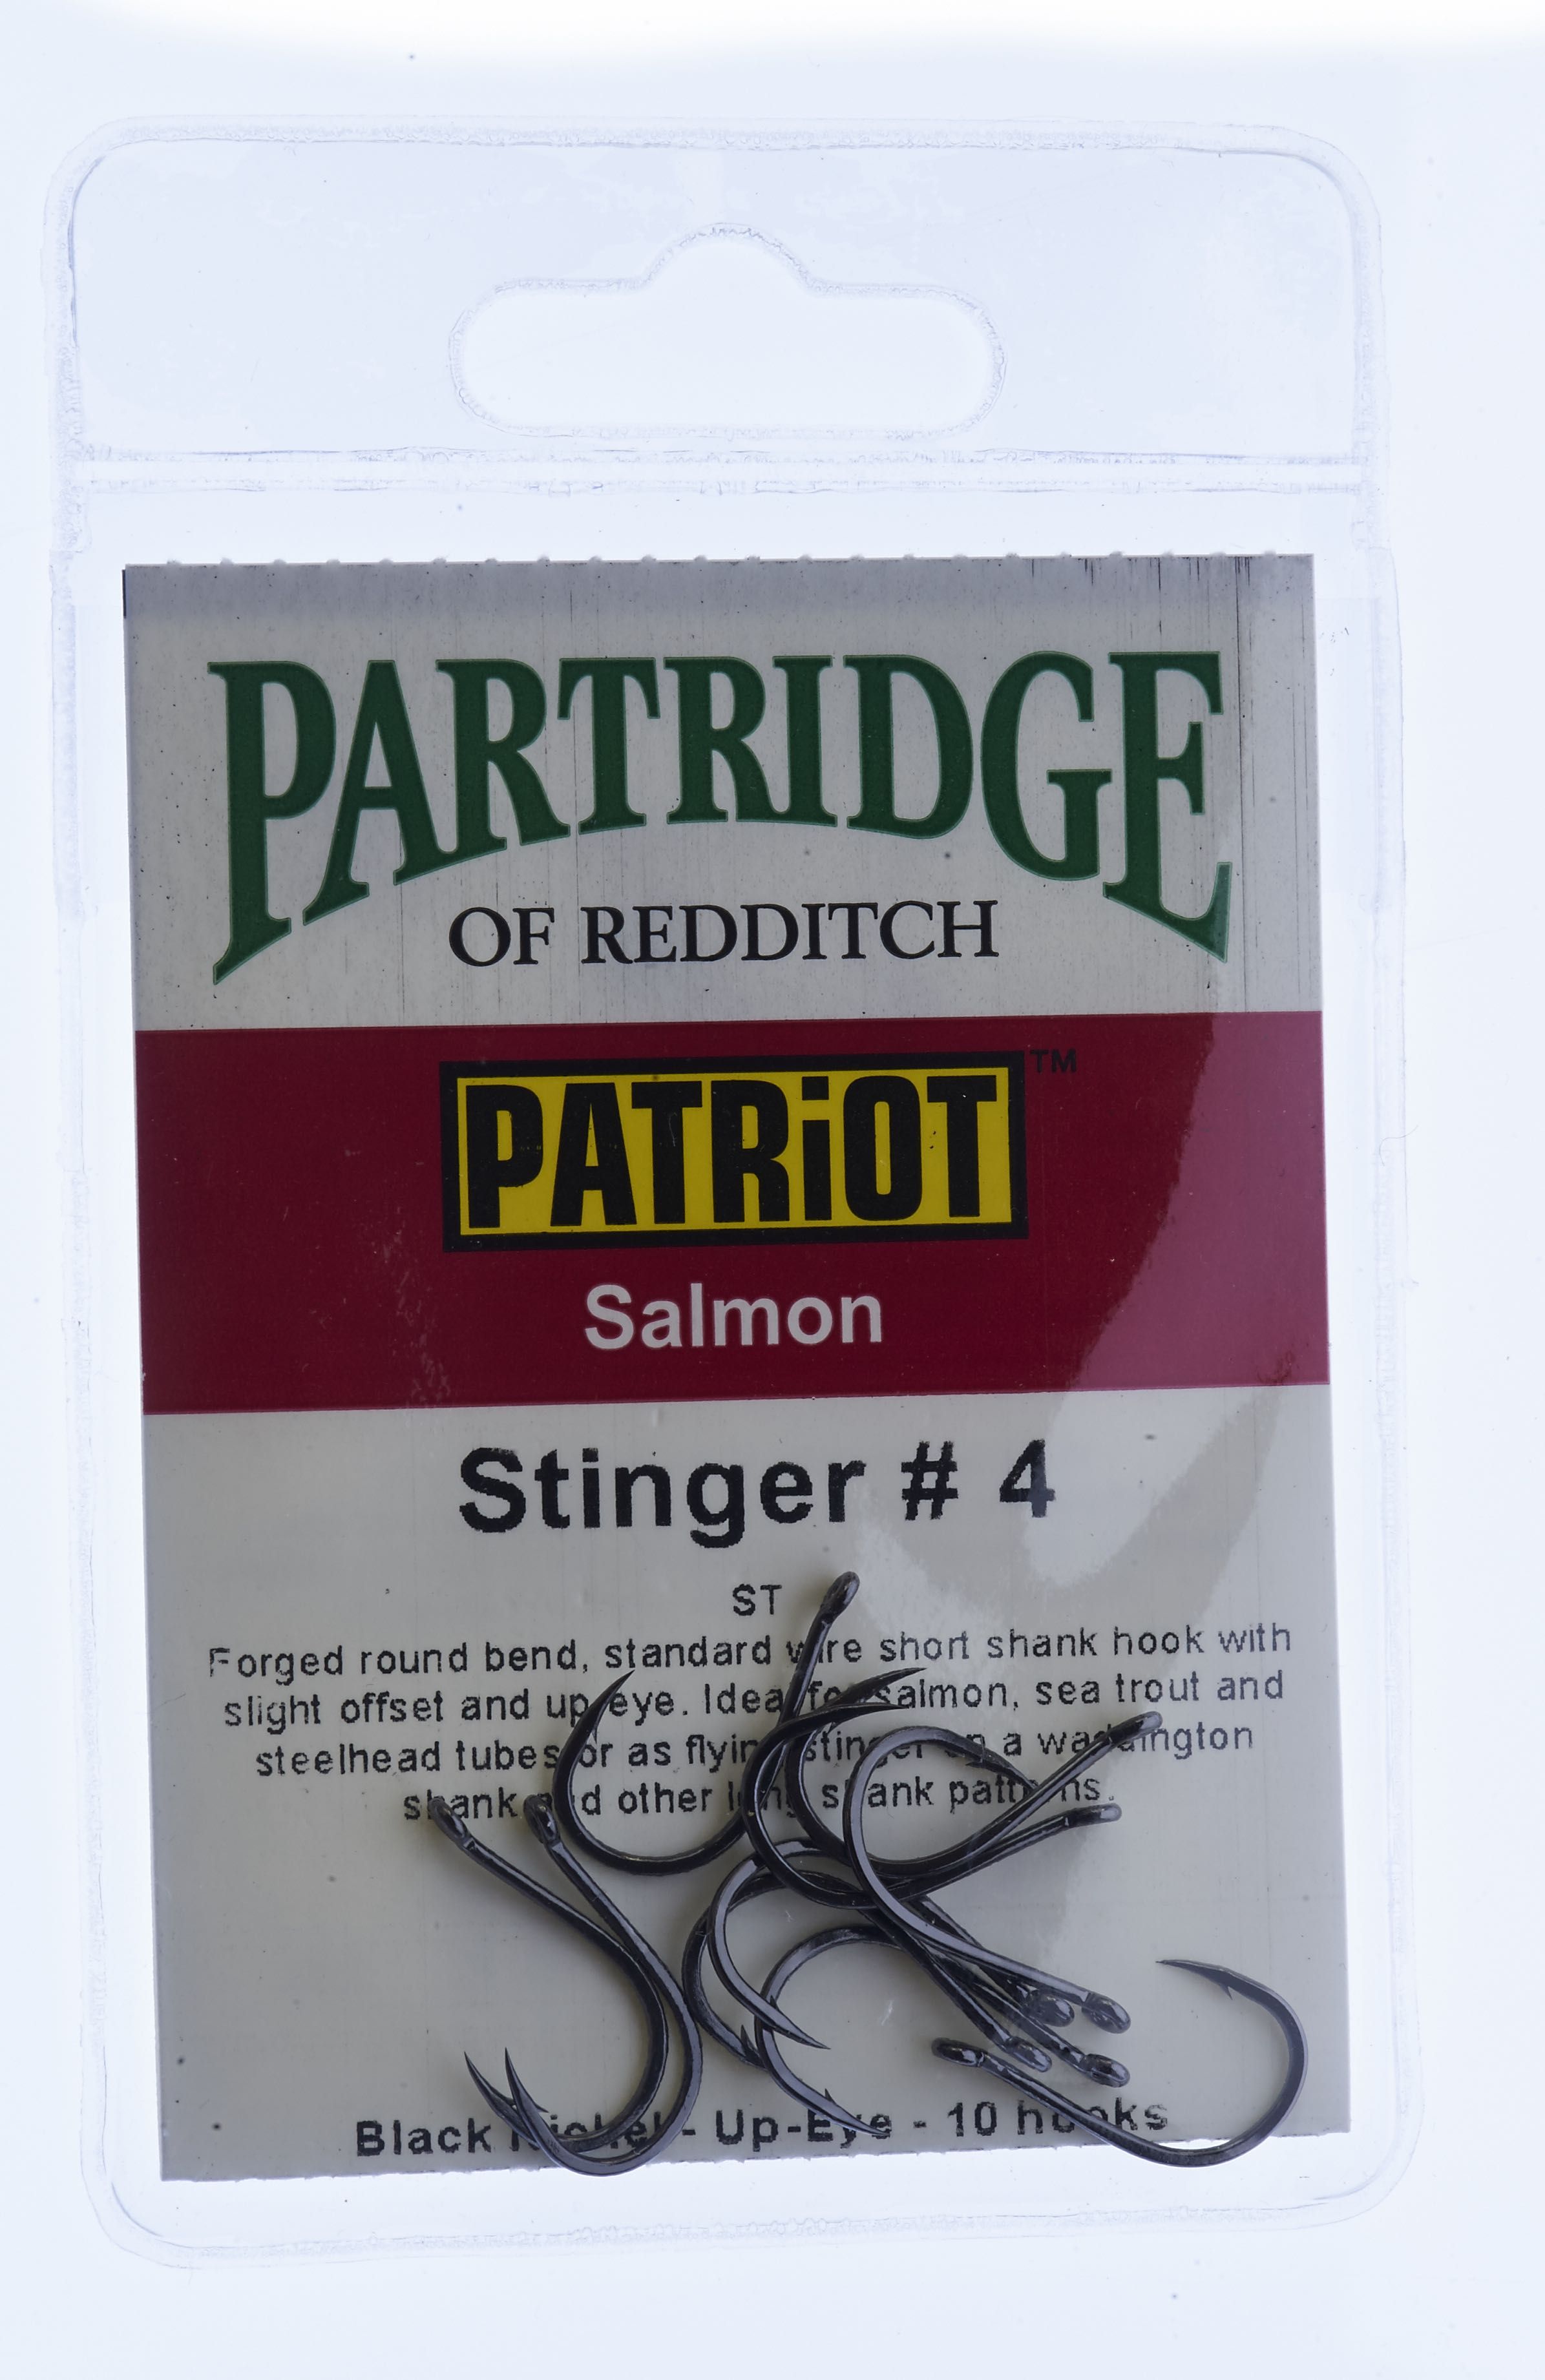 Partridge Patriot Stinger # 4 tube fly hook